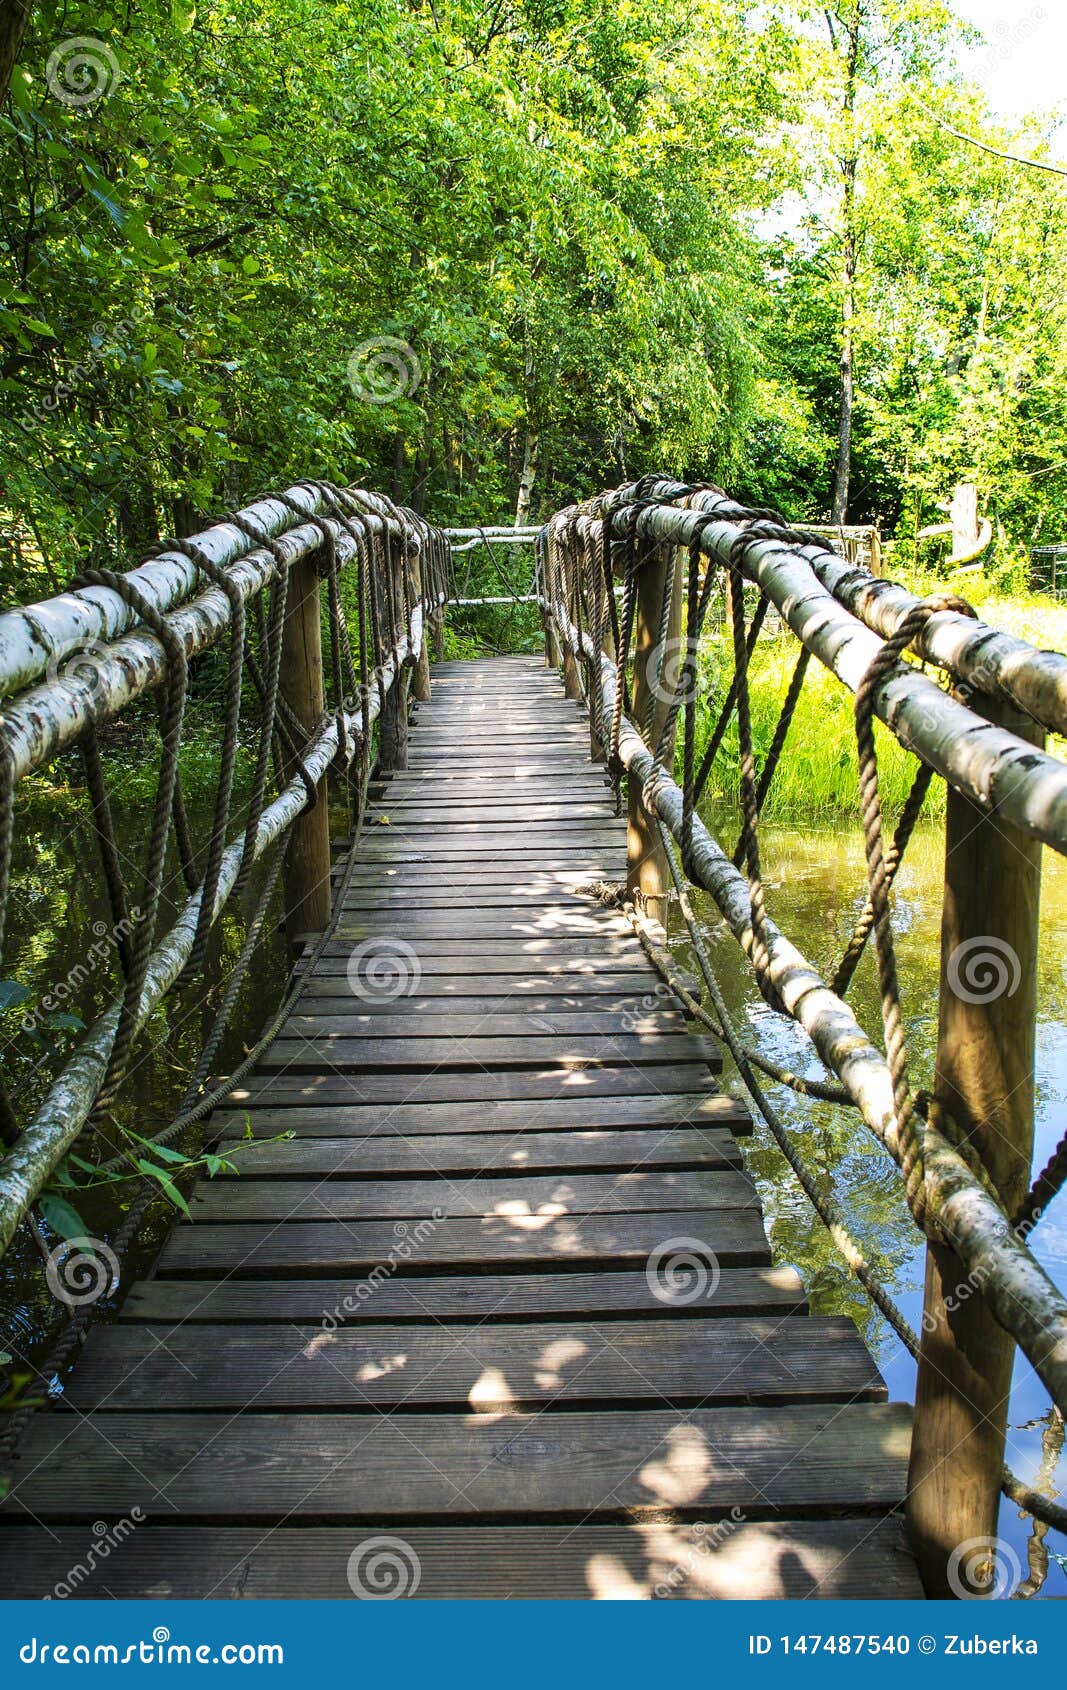 Wooden Nature Bridge stock photo. Image of long, outdoor - 147487540